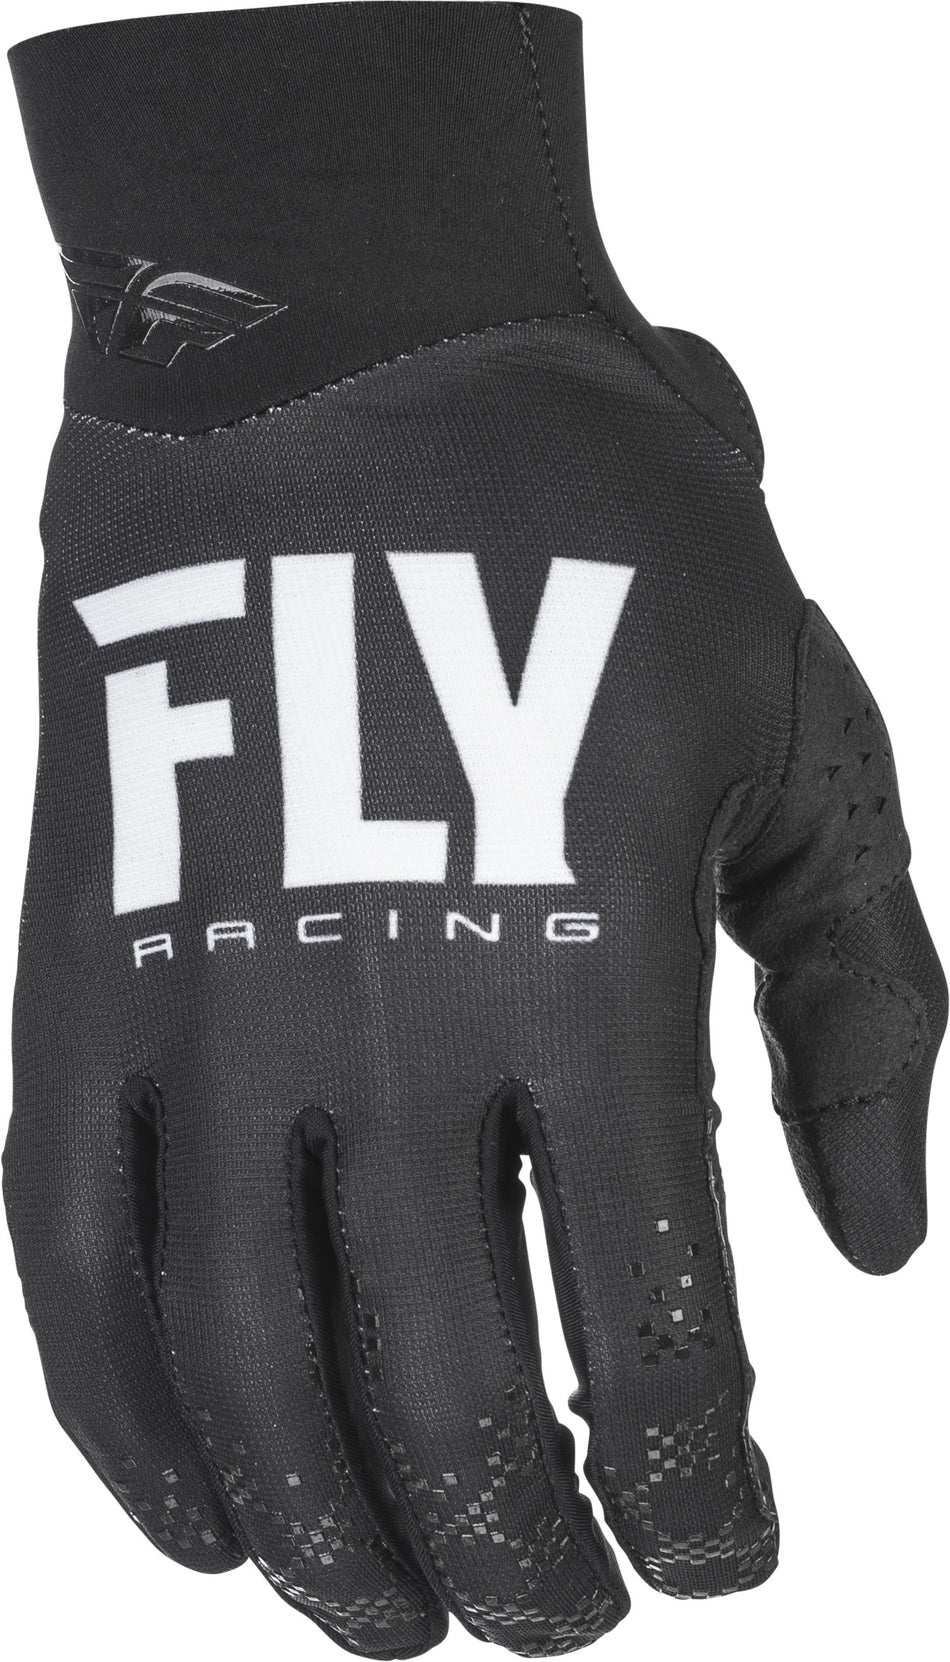 FLY RACING Pro Lite Gloves Black Sz 9 371-81009